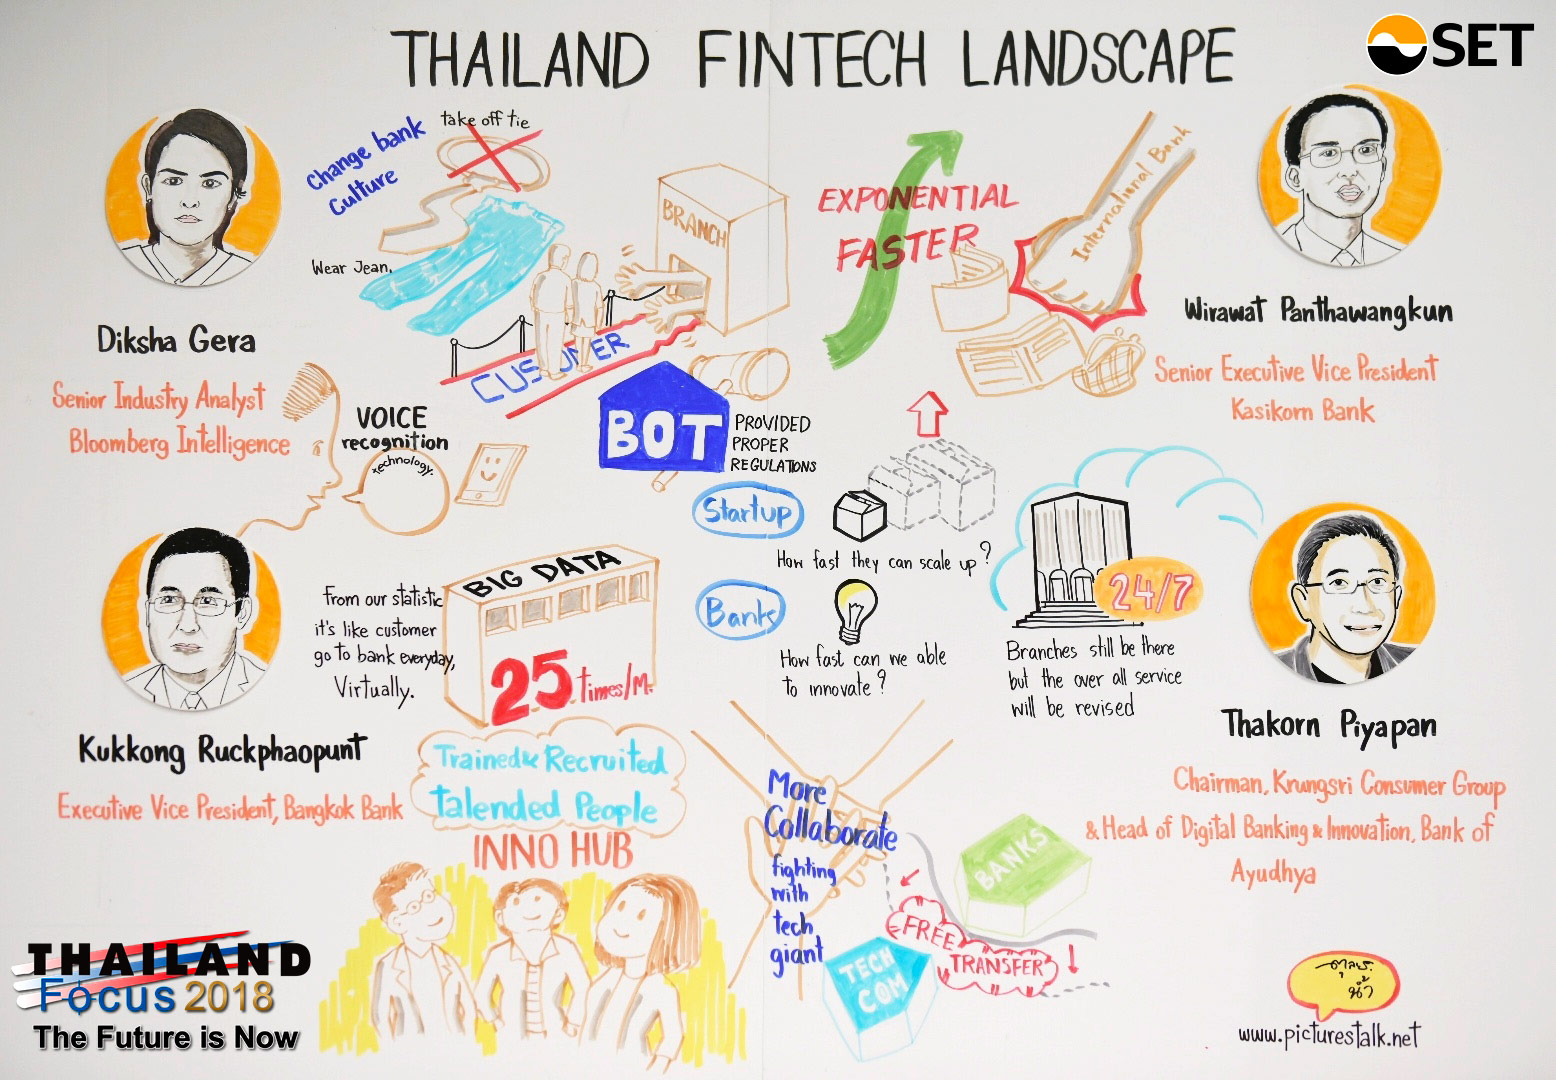 Thailand Focus 2018 - Thailand Fintech Landscape - Mr. Kukkong Ruckphaopunt Mr. Wirawat Panthawangkun Mr. Thakorn Piyapan